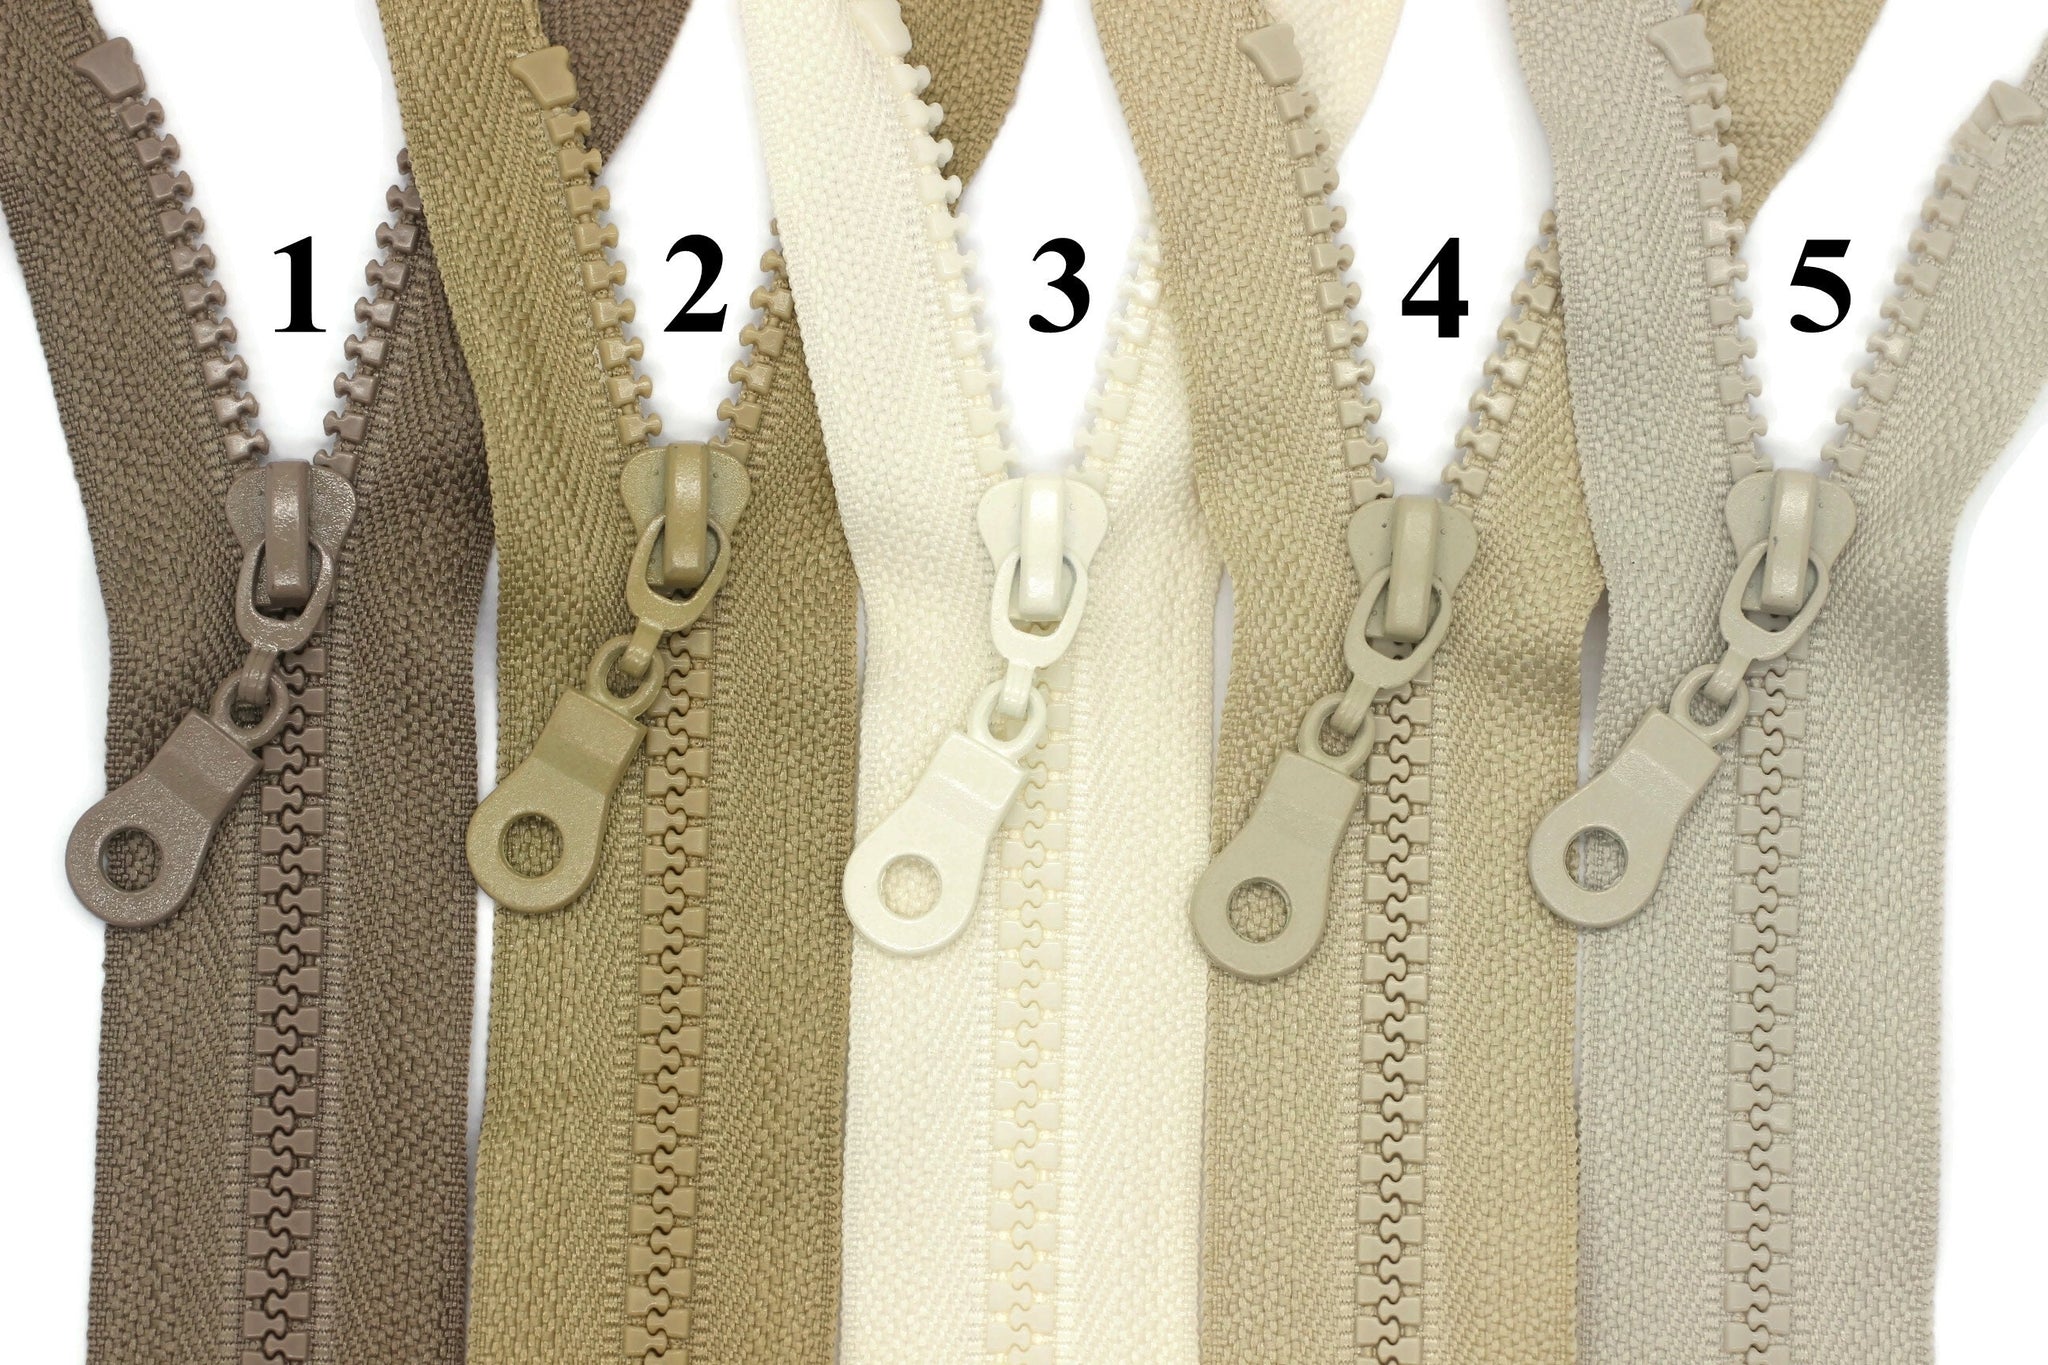 Hard Plastic Jacket Zippers Shaped Like Stock Photo 1390948511 |  Shutterstock